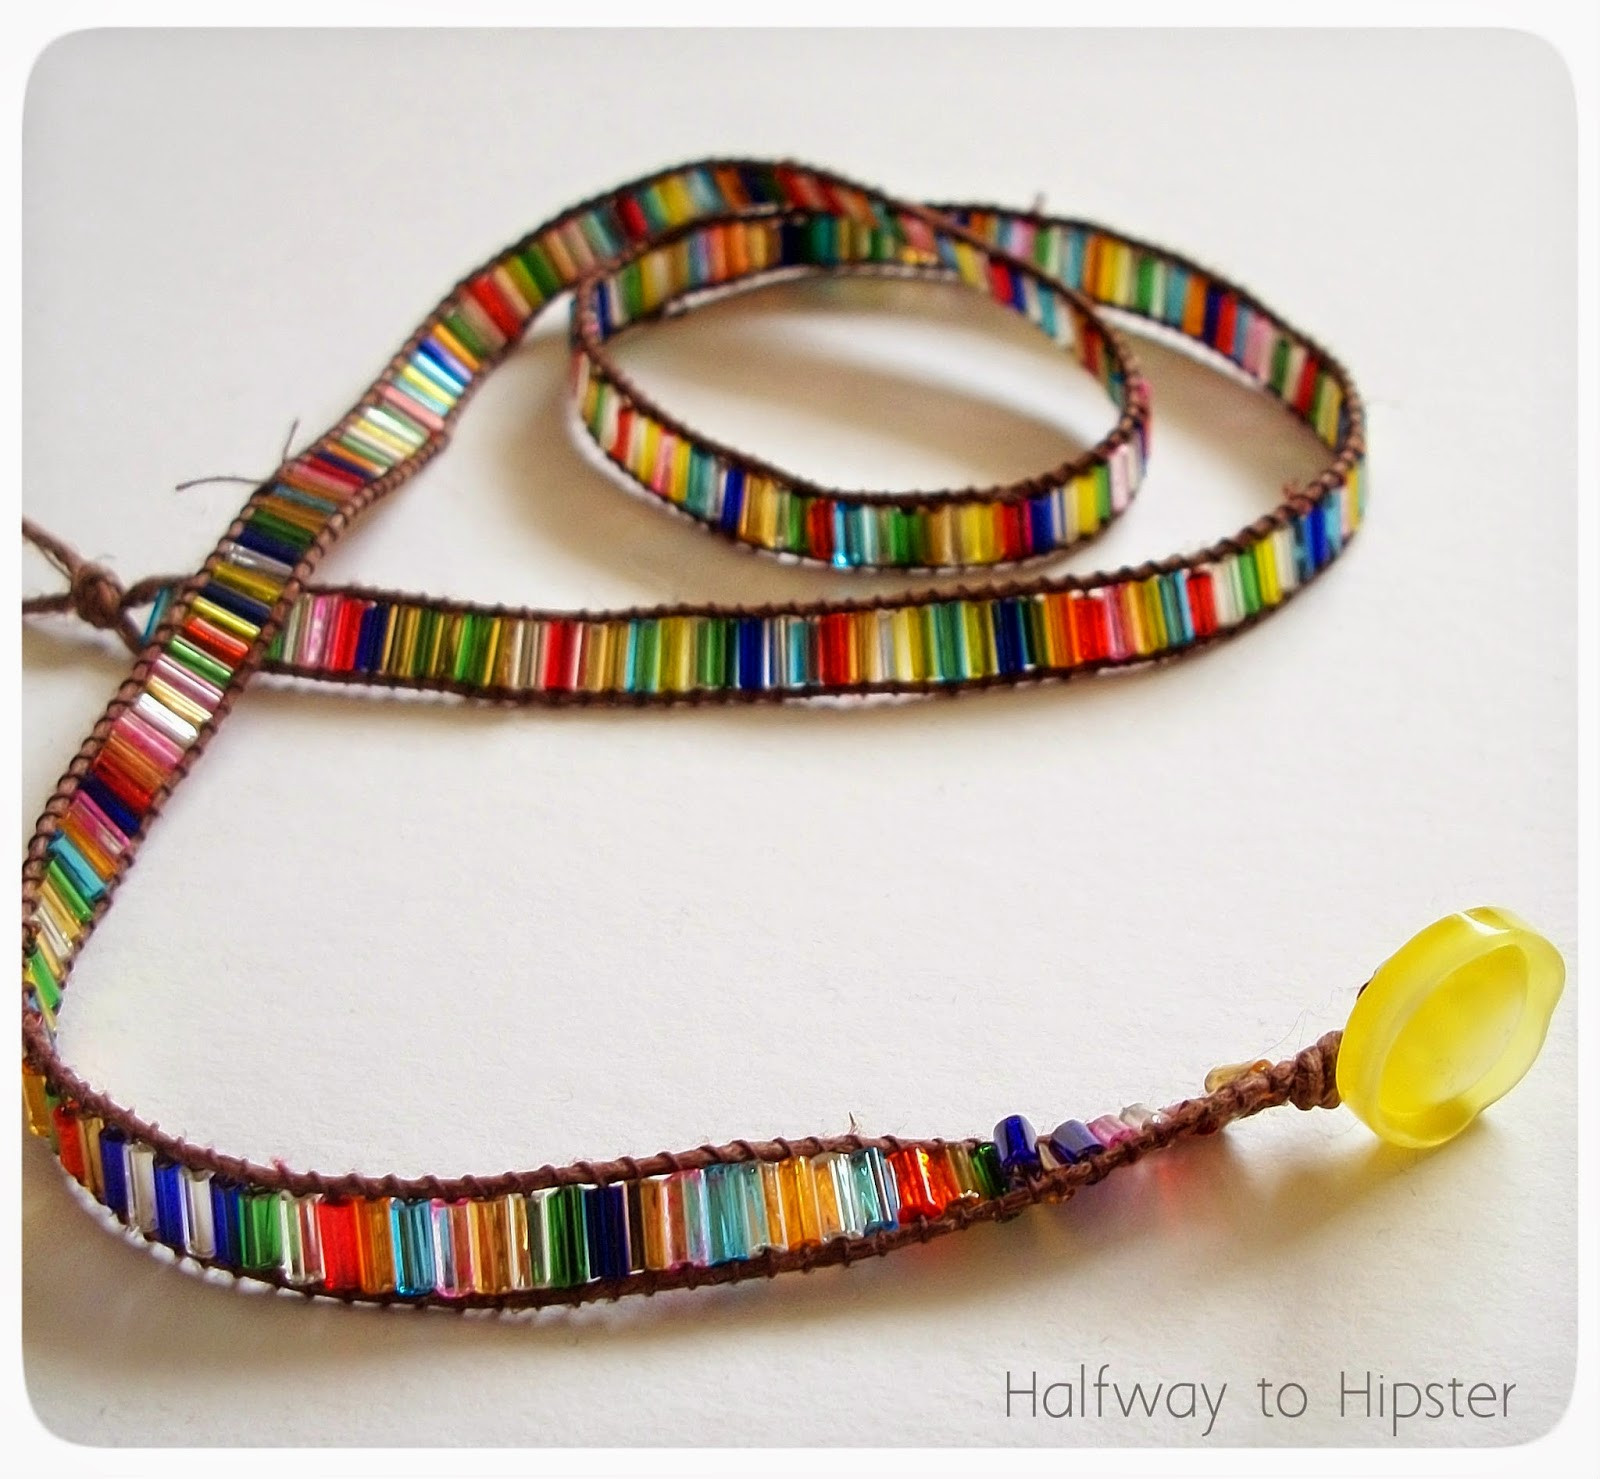 Best ideas about DIY Wrap Bracelet
. Save or Pin Halfway To Hipster DIY Wrap Bracelet Now.